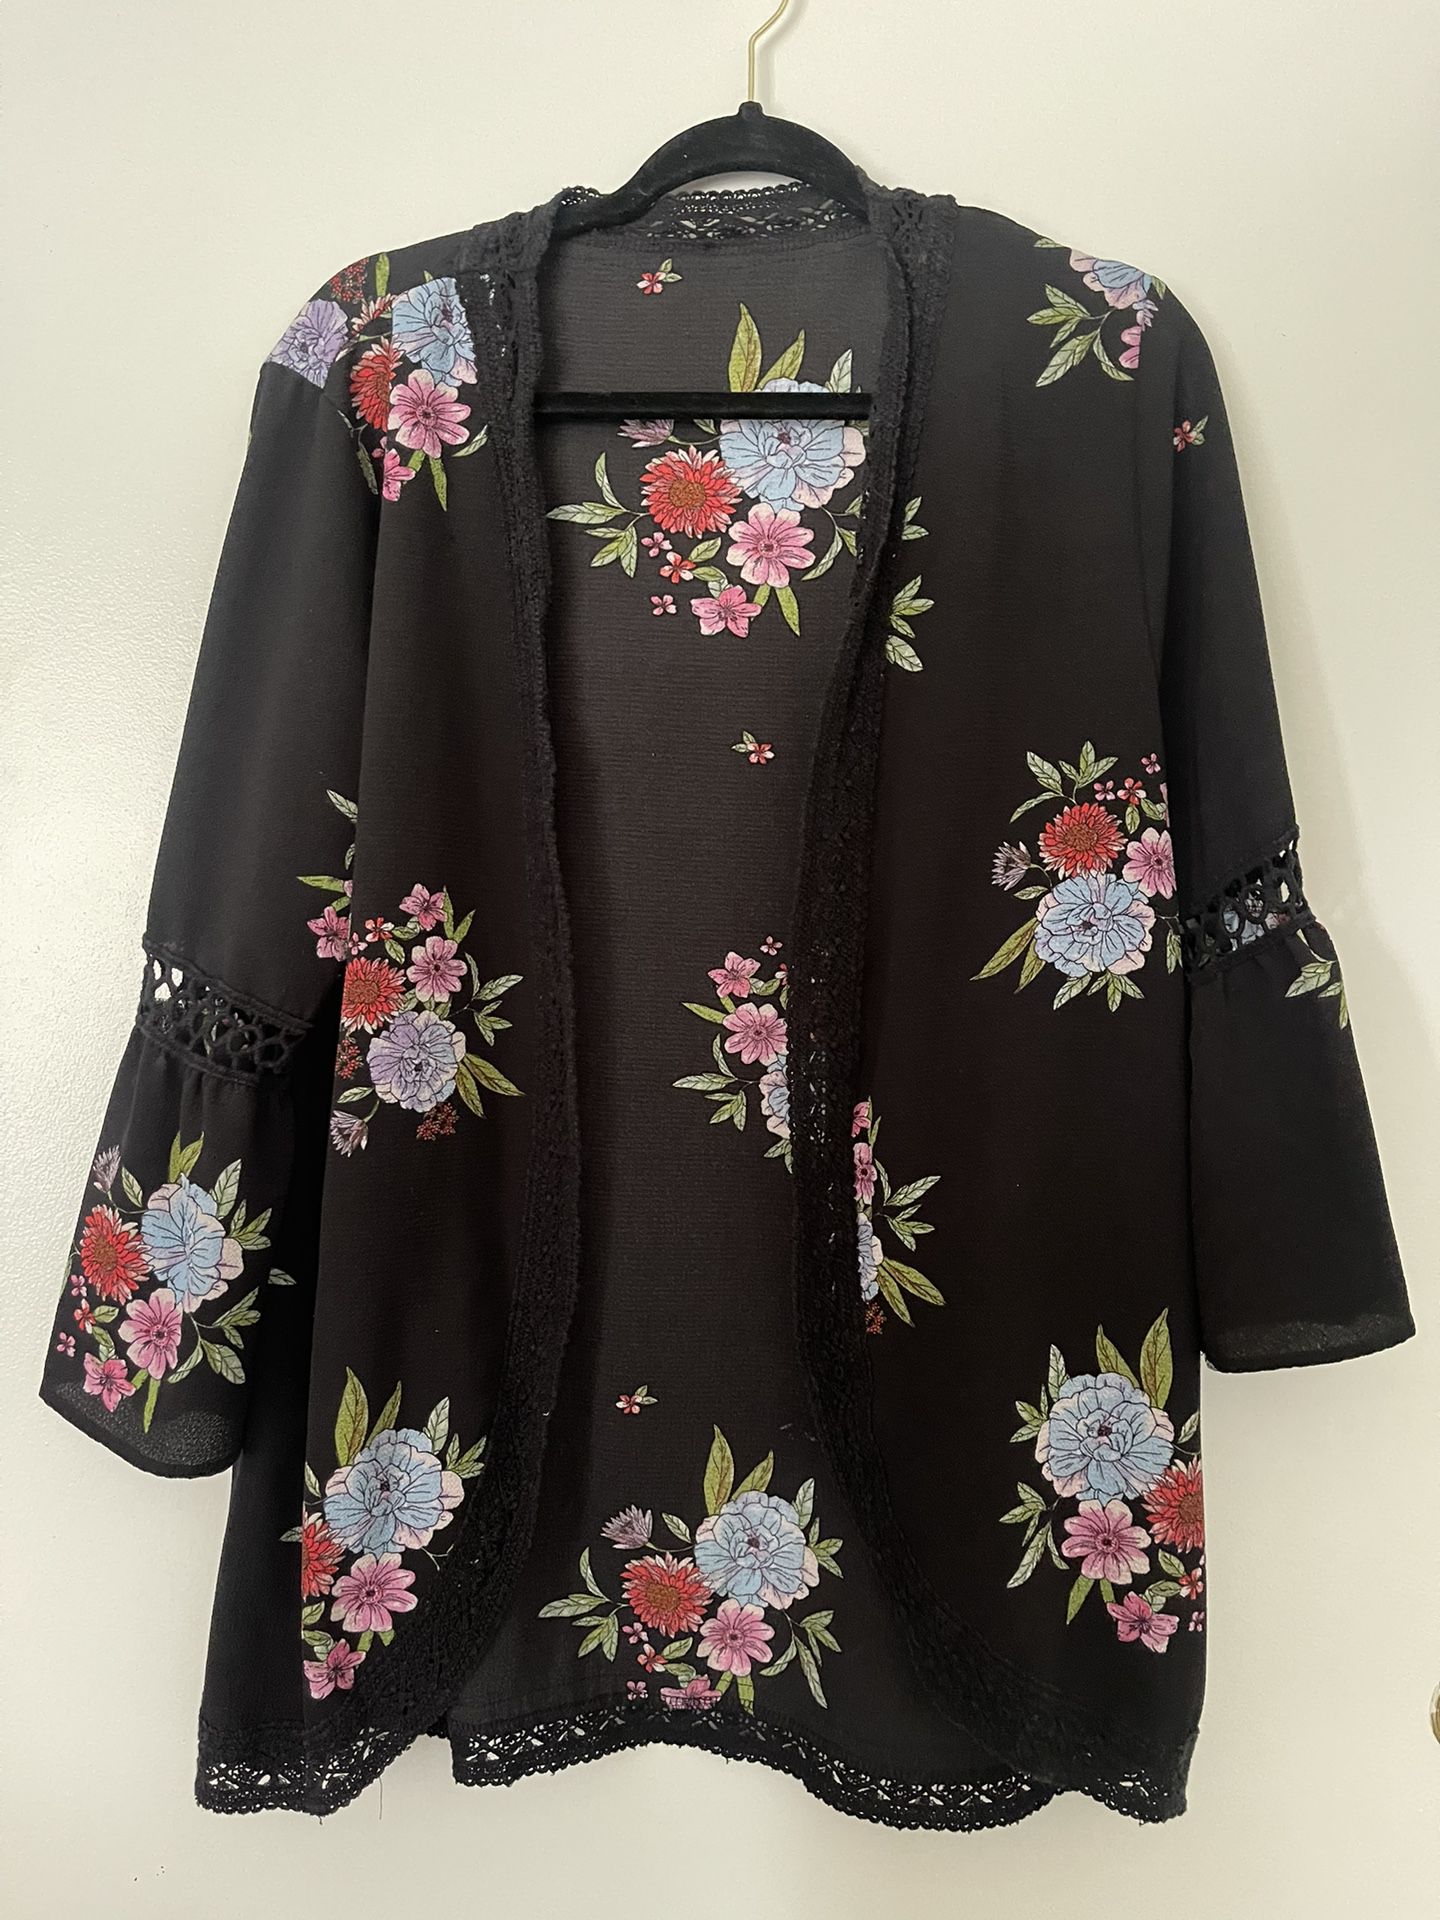 Floral Black Kimono Style Cardigan